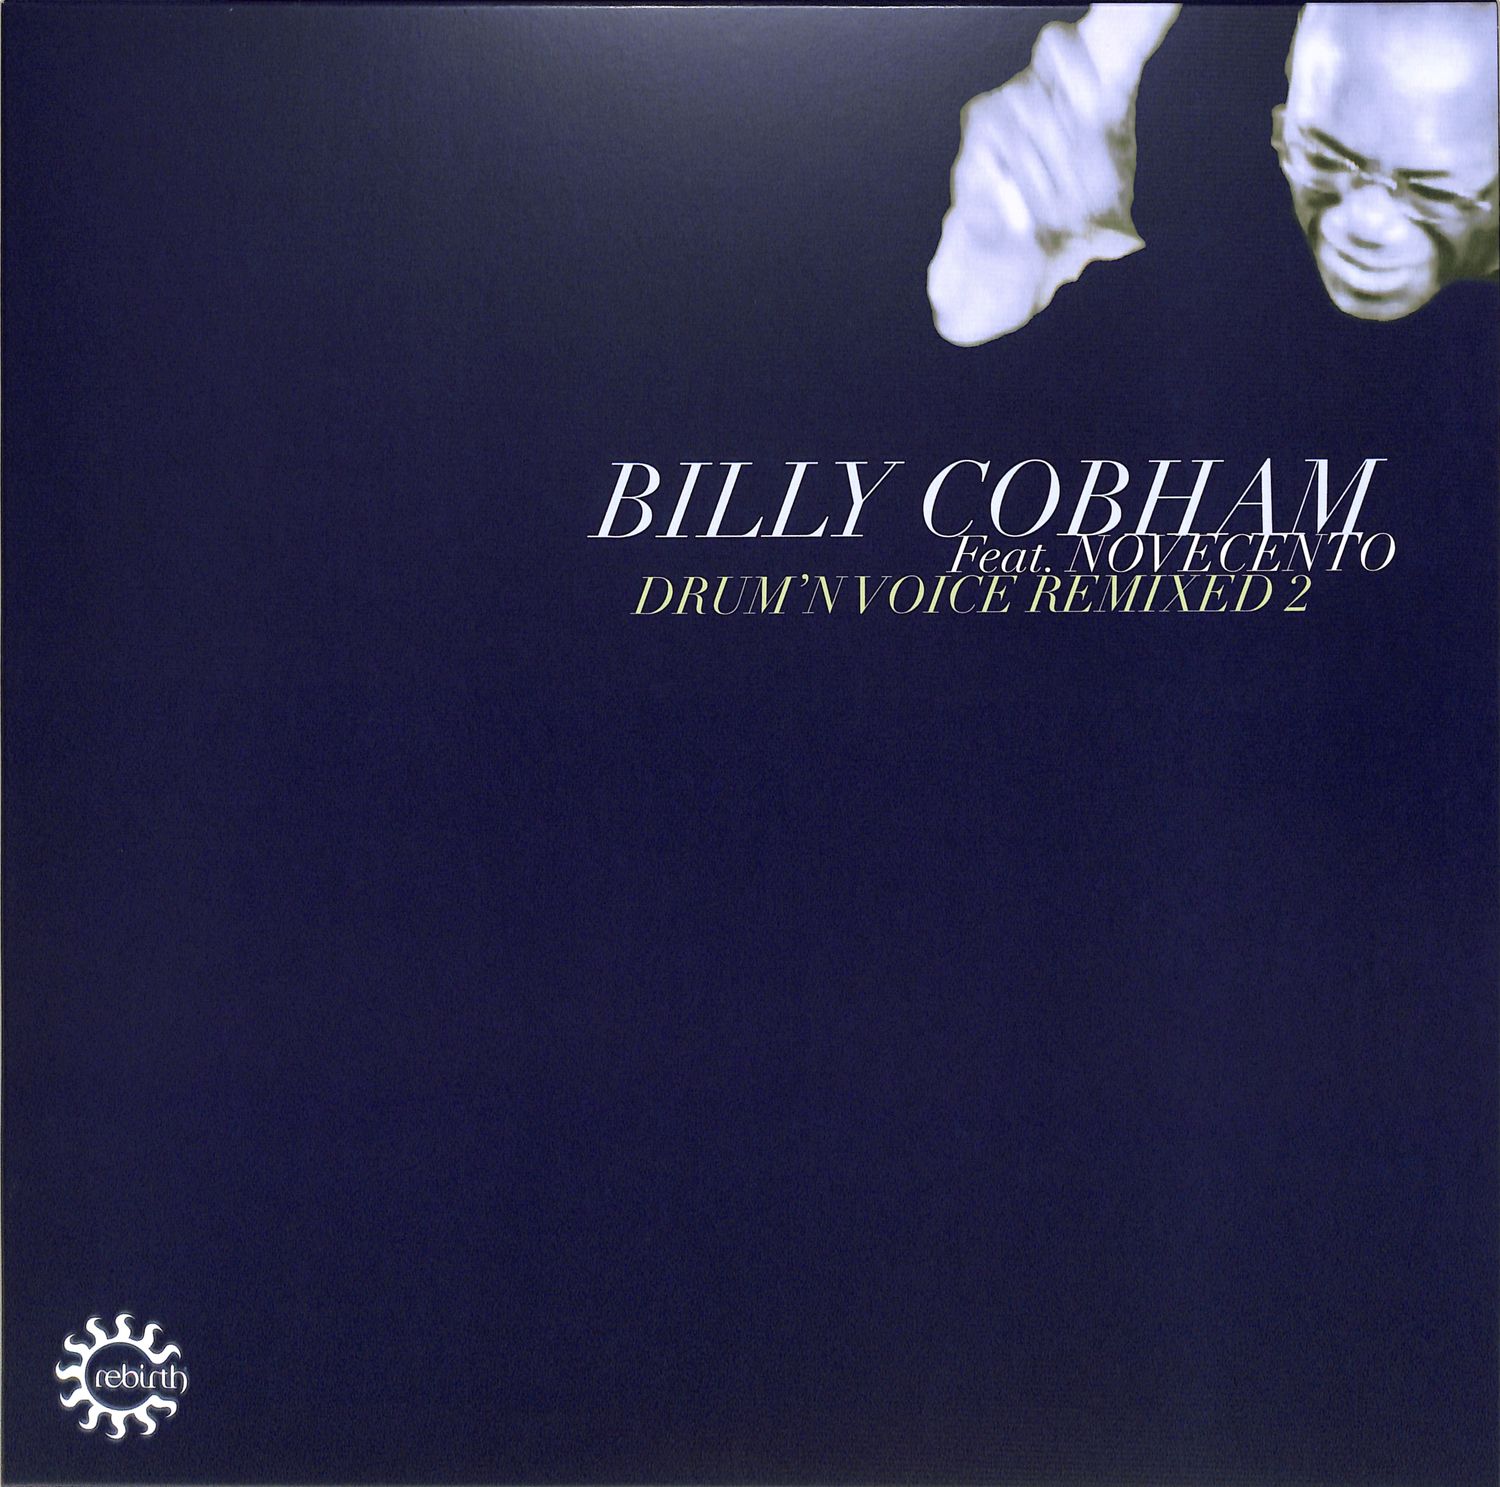 Billy Cobham ft. Novecento - DRUM N VOICE REMIXED 2